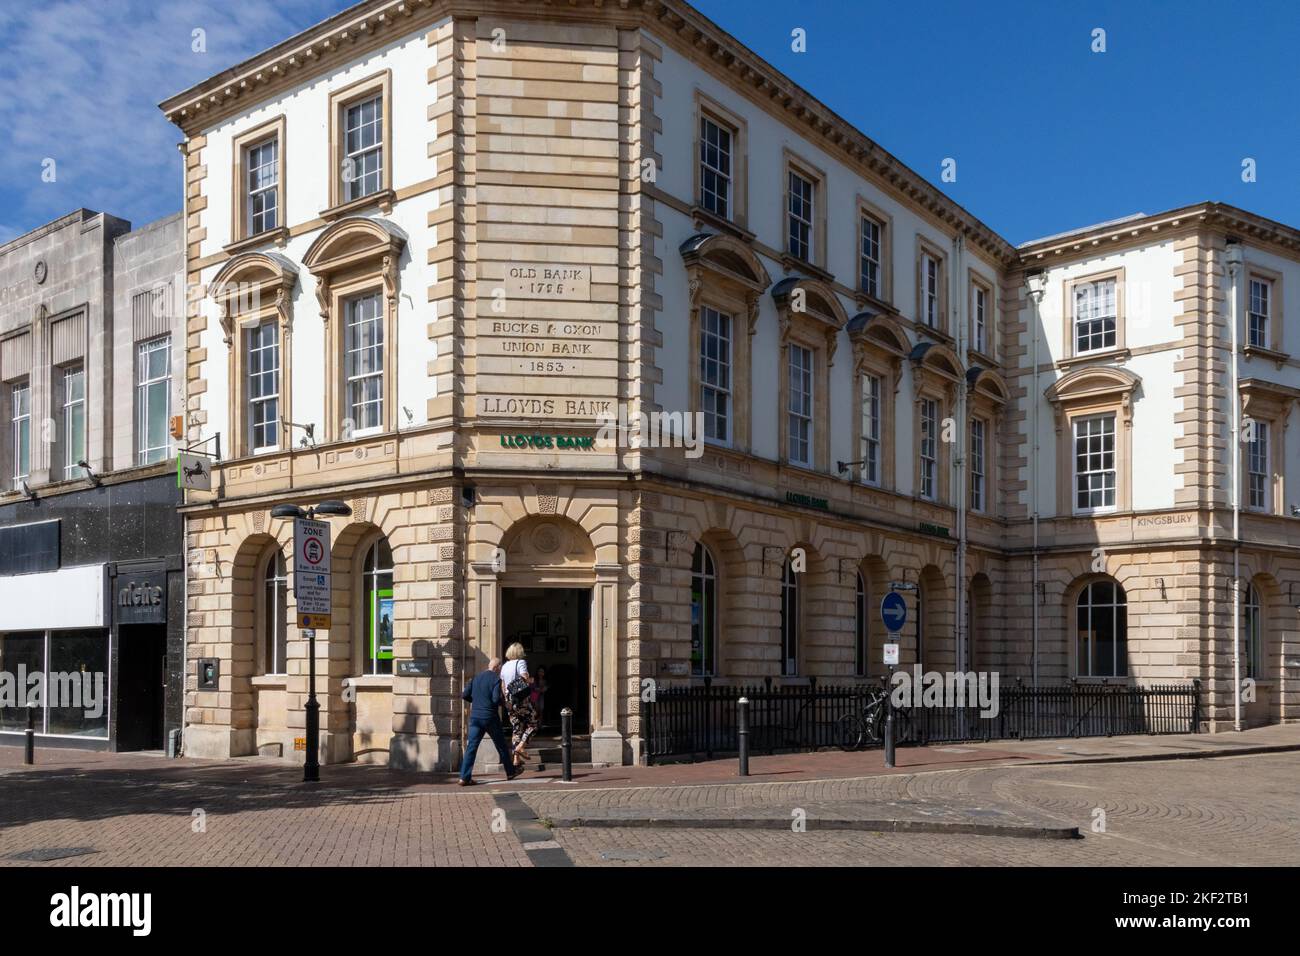 Lloyds Bank anciennement Bucks and Oxon Union Bank, Aylesbury, Buckinghamshire, Angleterre Banque D'Images